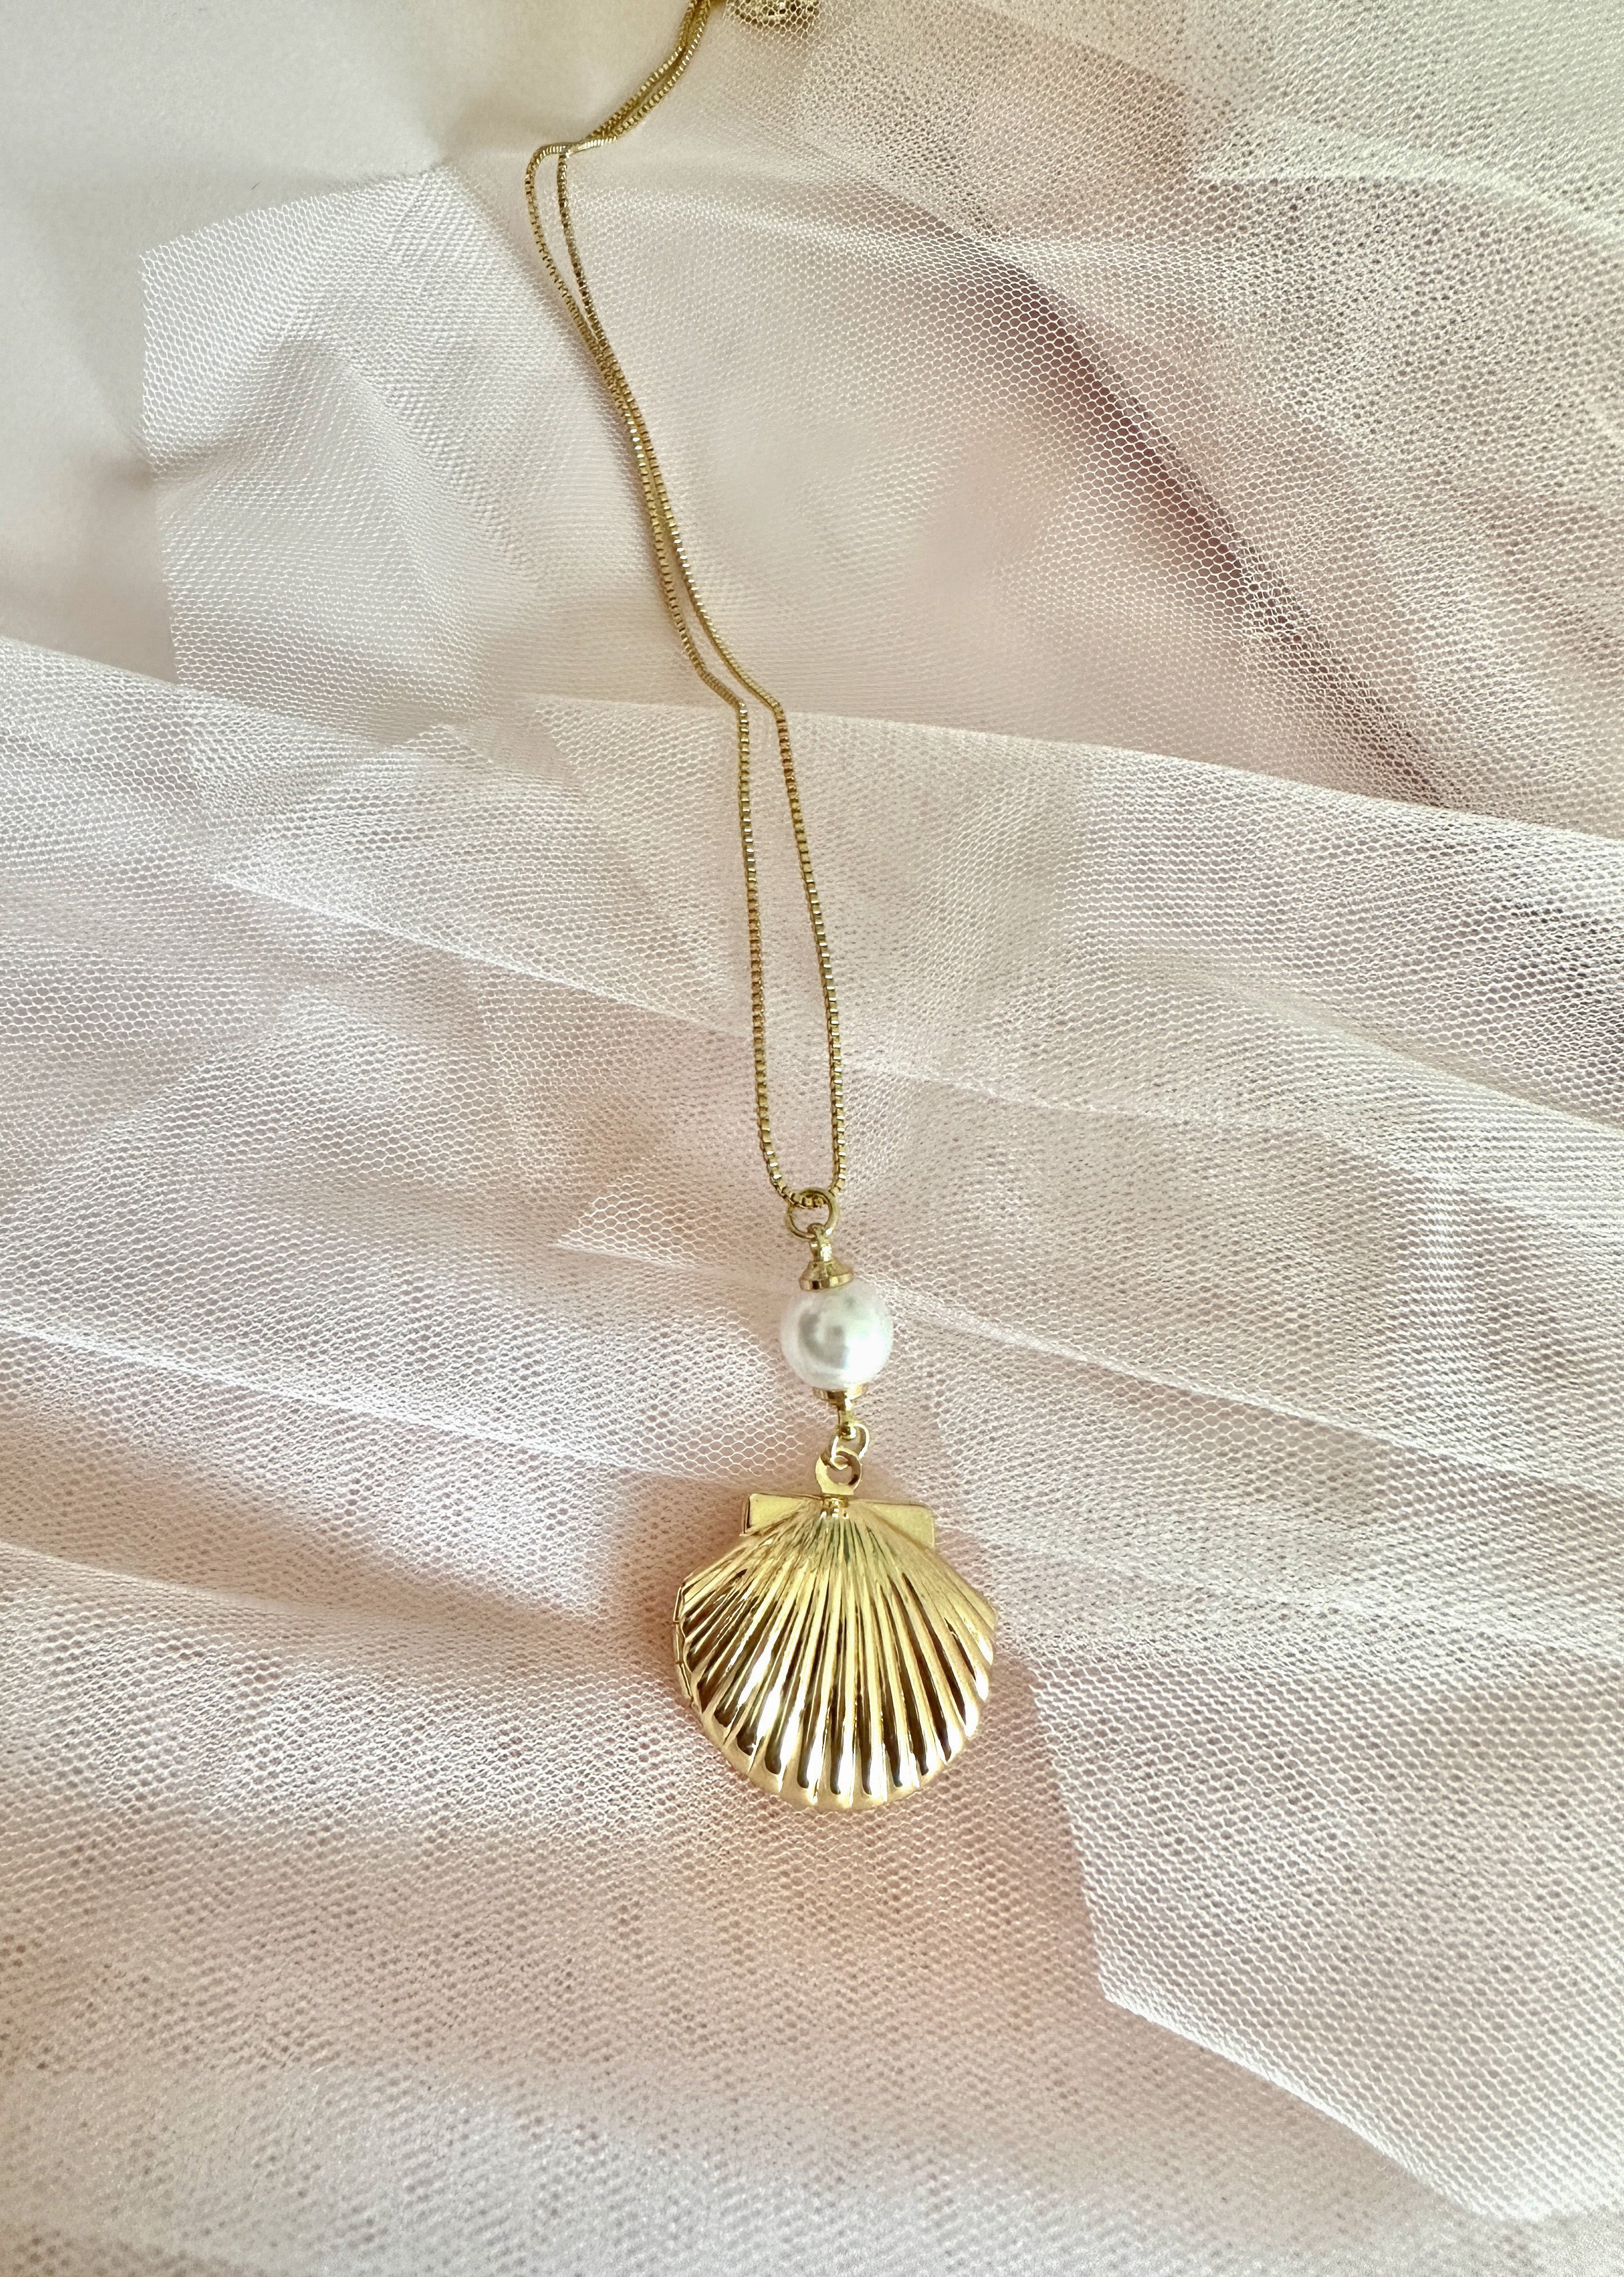 The “Halle” Seashell Locket Necklace